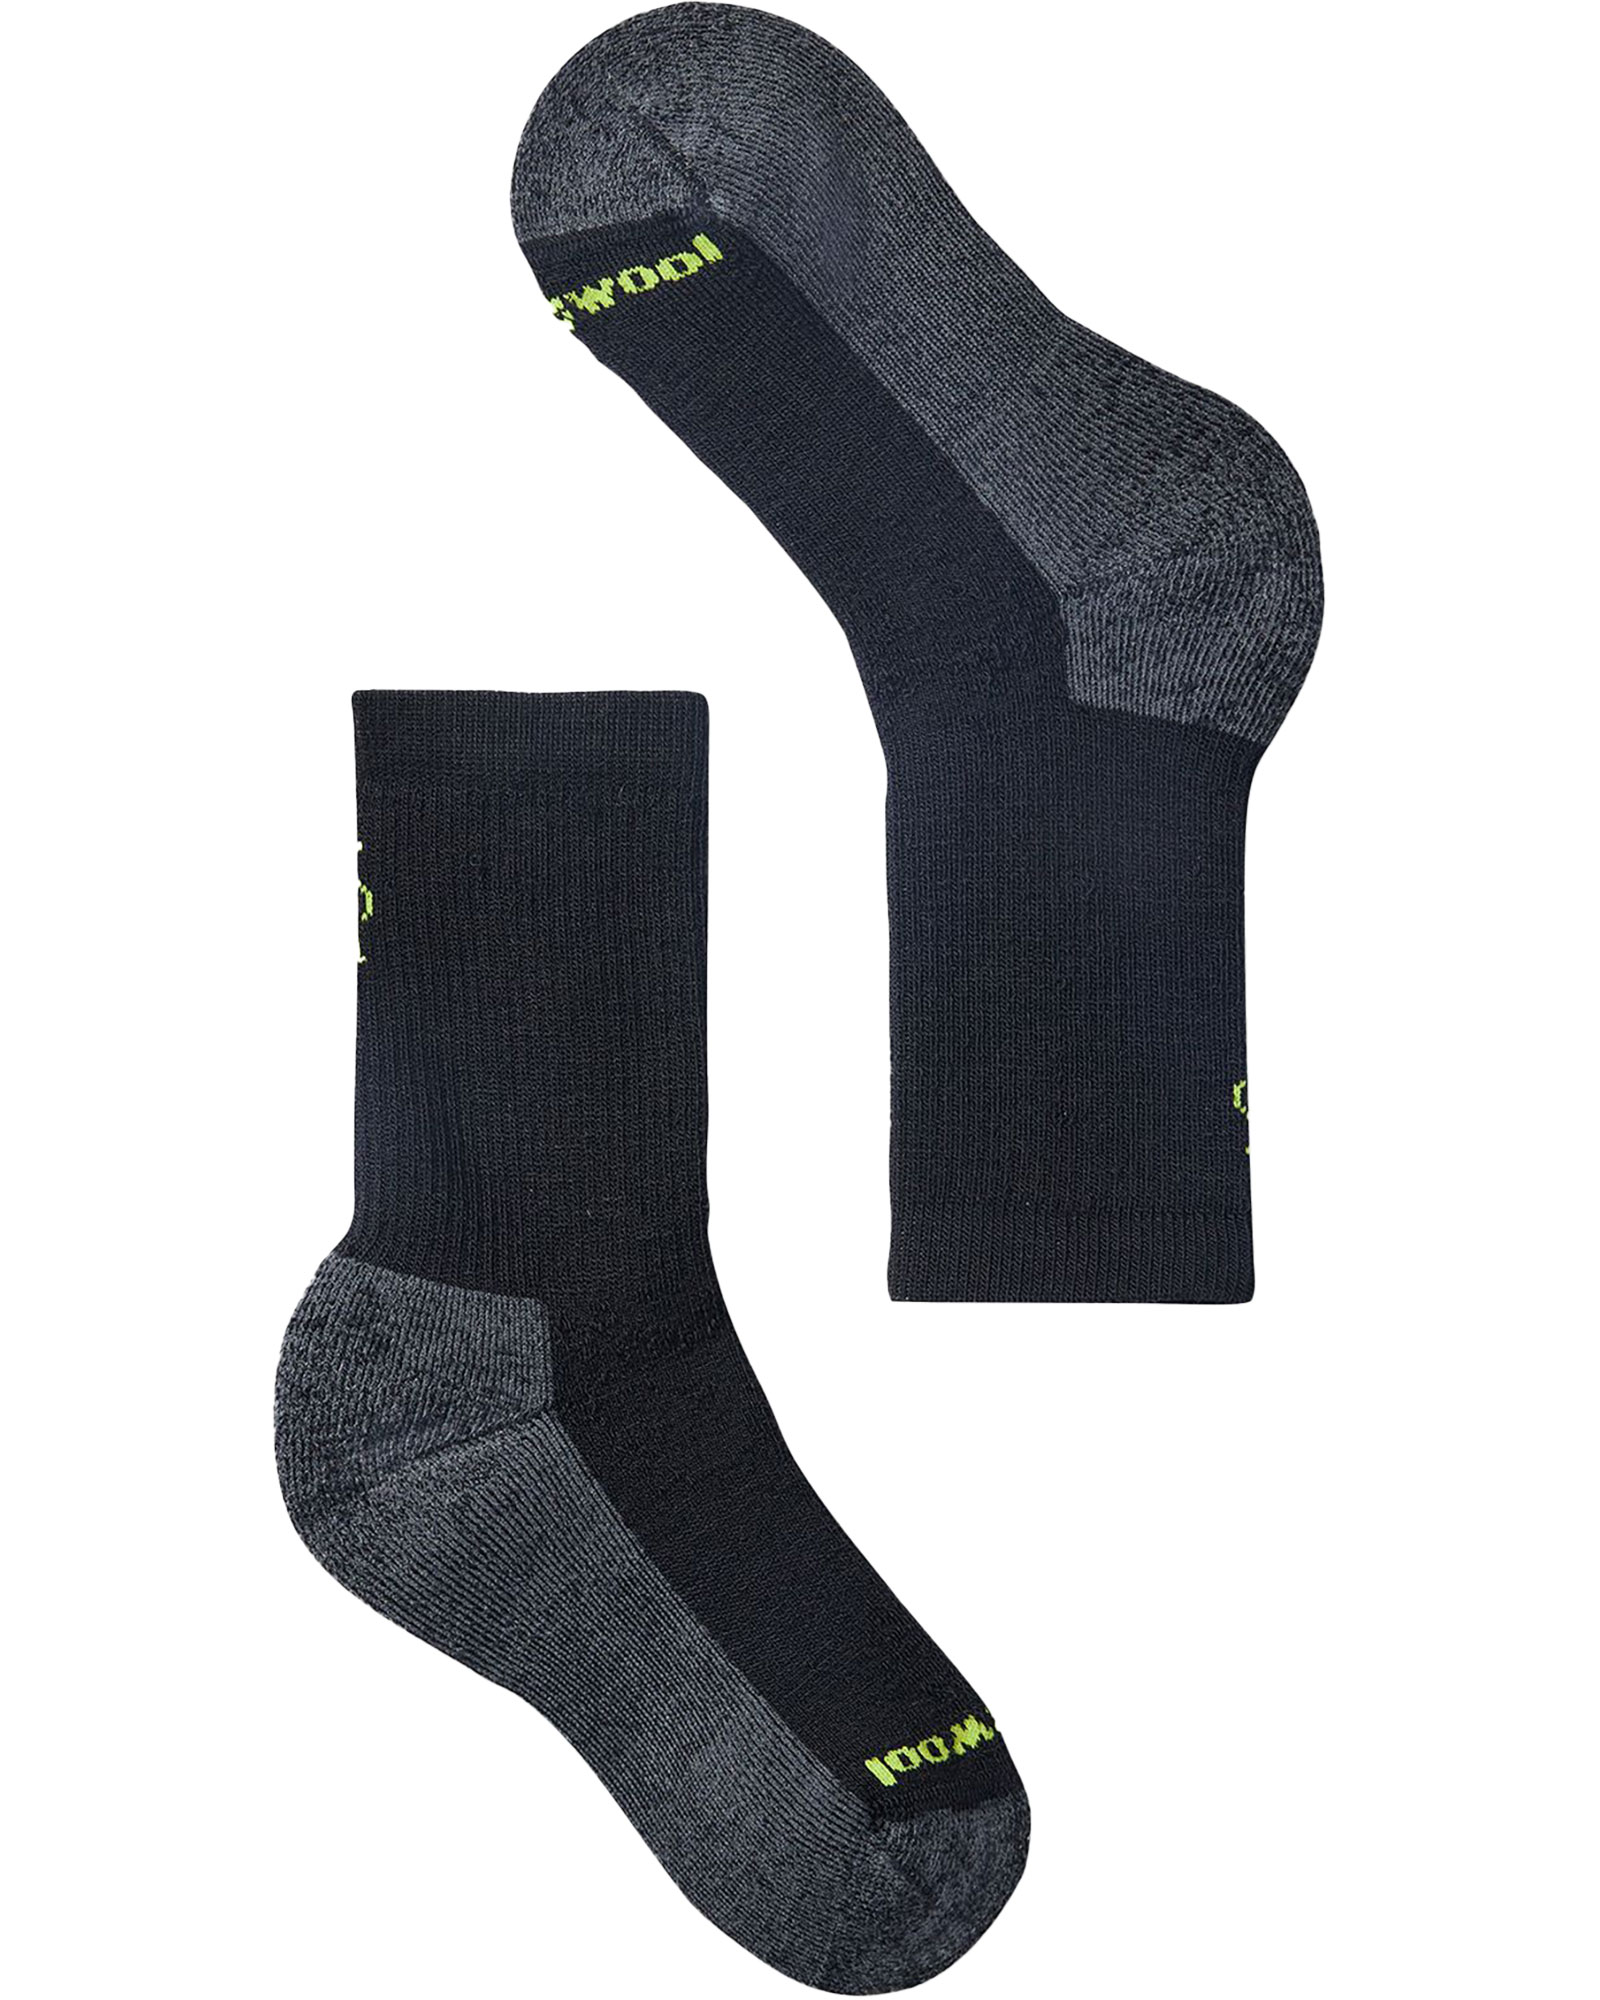 Smartwool Wintersport Full Cushion Kids Socks